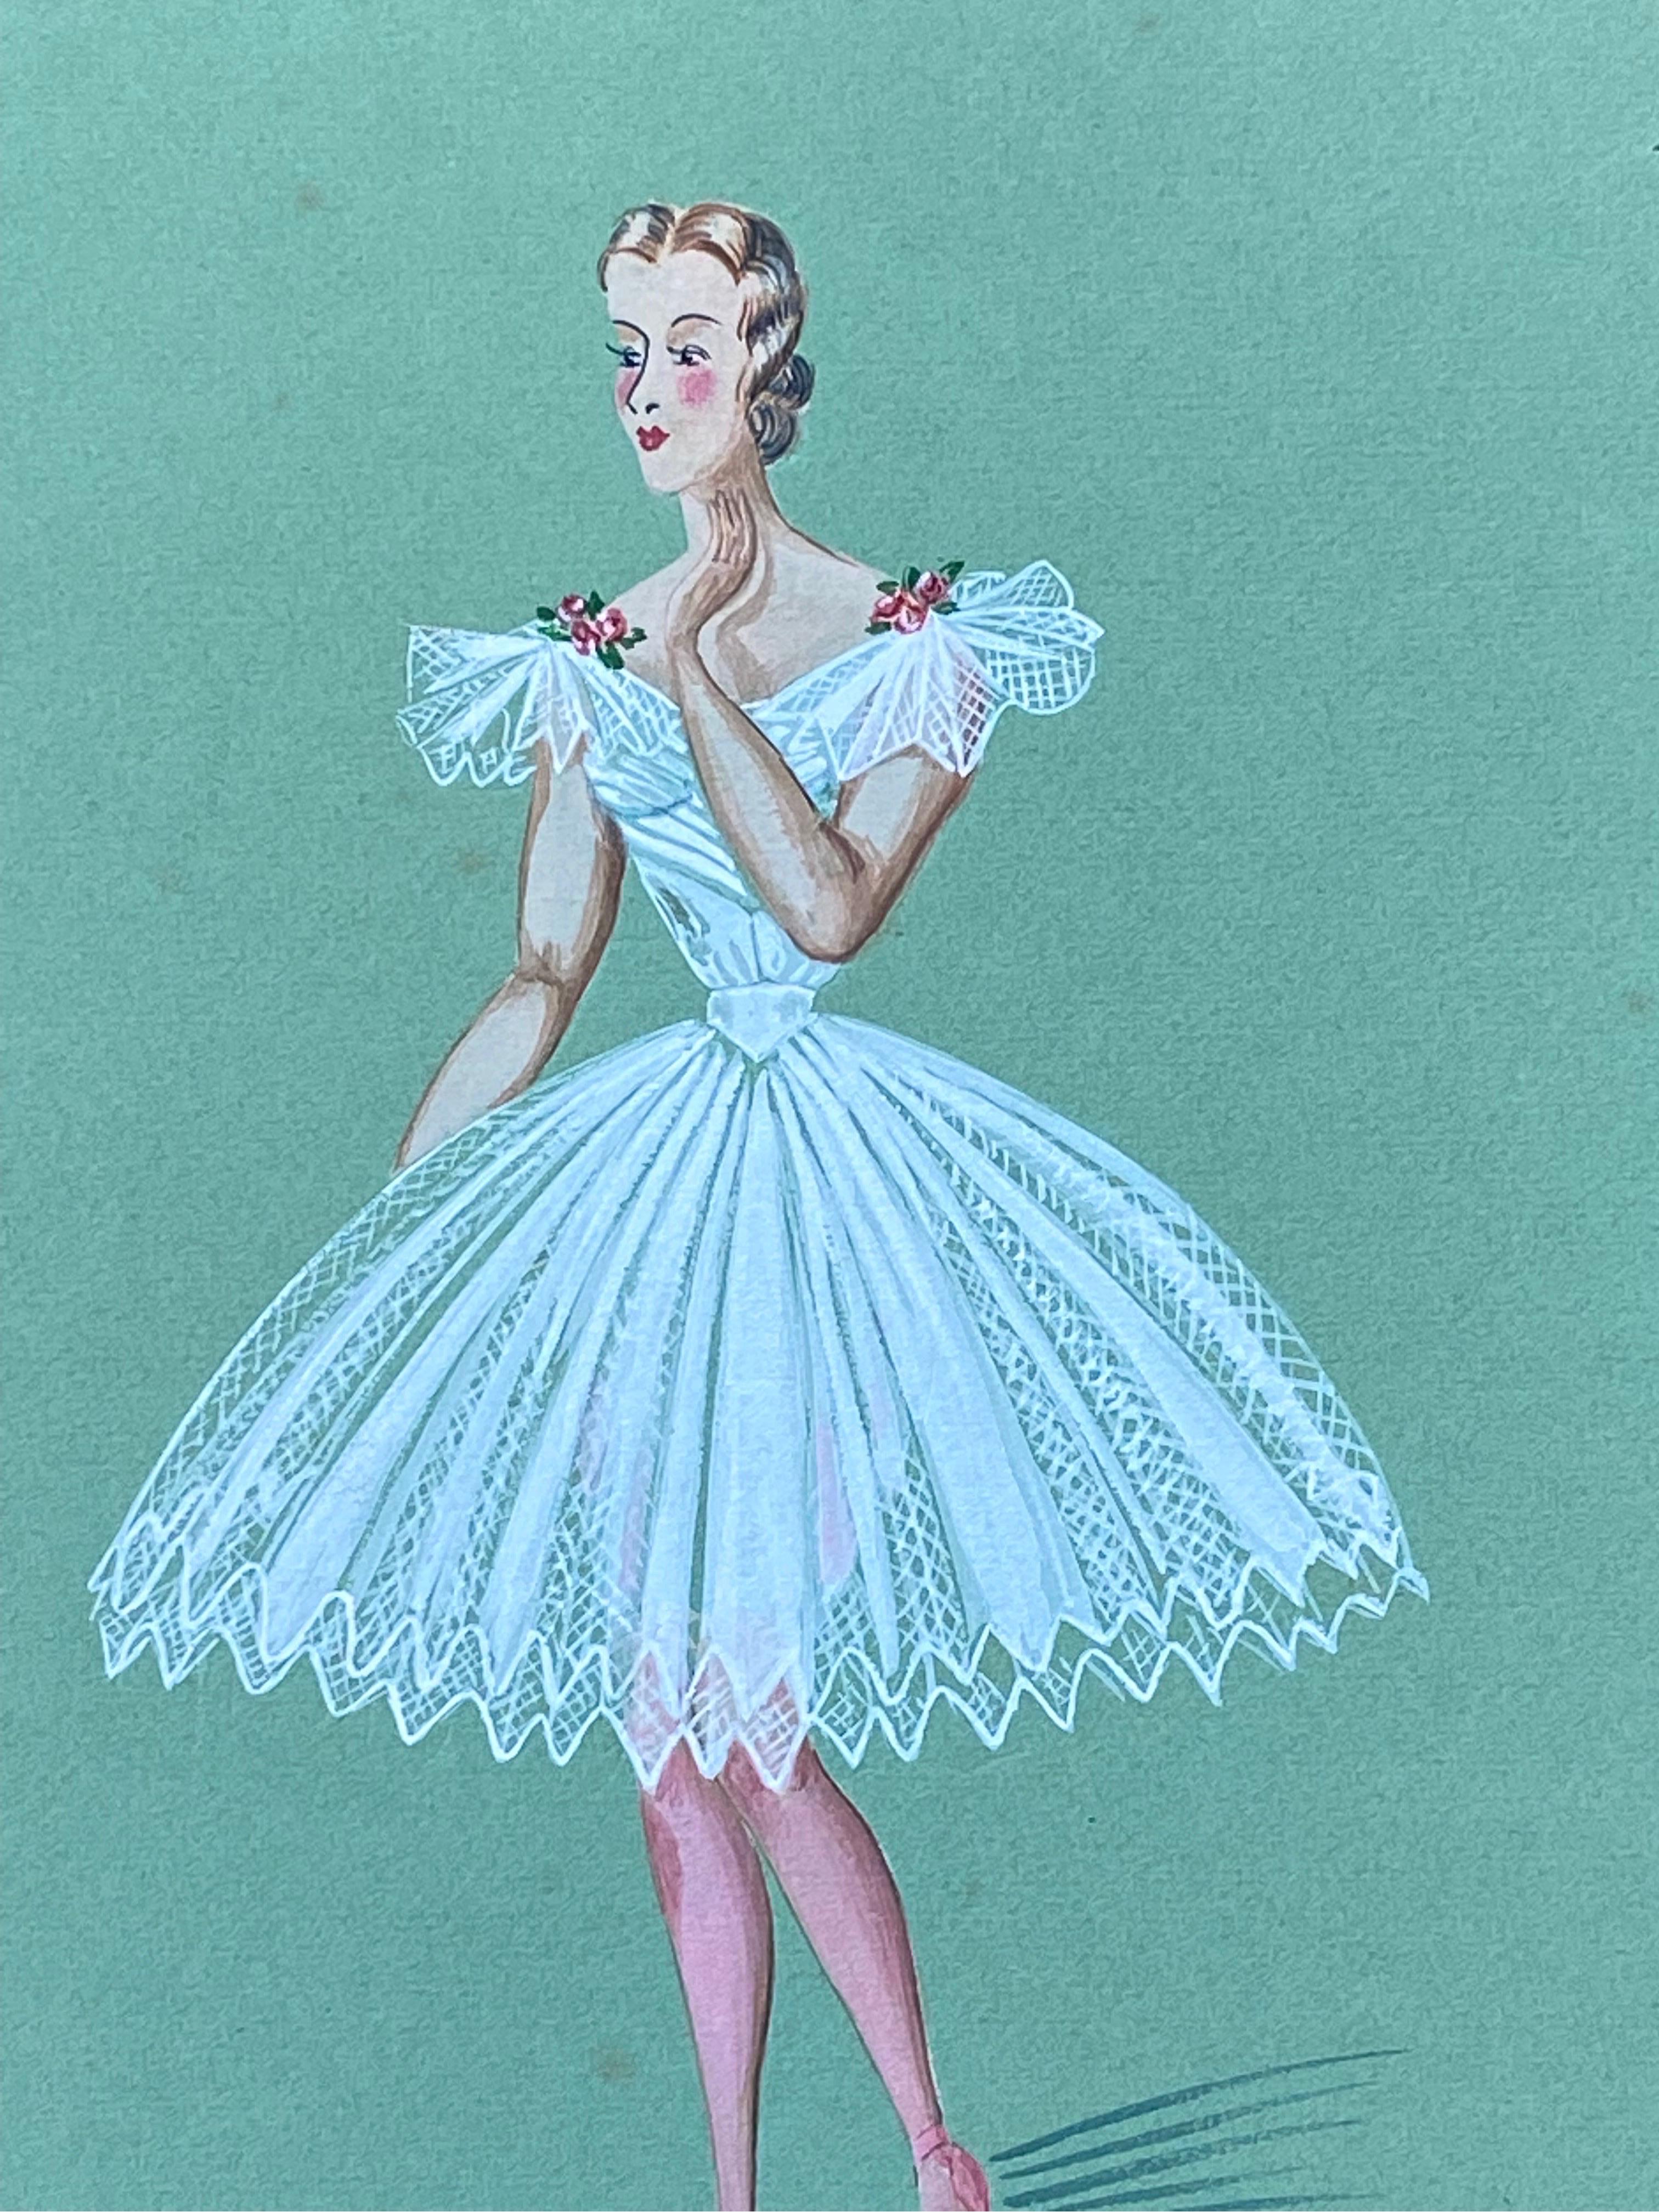 1940's French Fashion Illustration - Stunning Ballerina In White Dress - Art by Geneviève Thomas